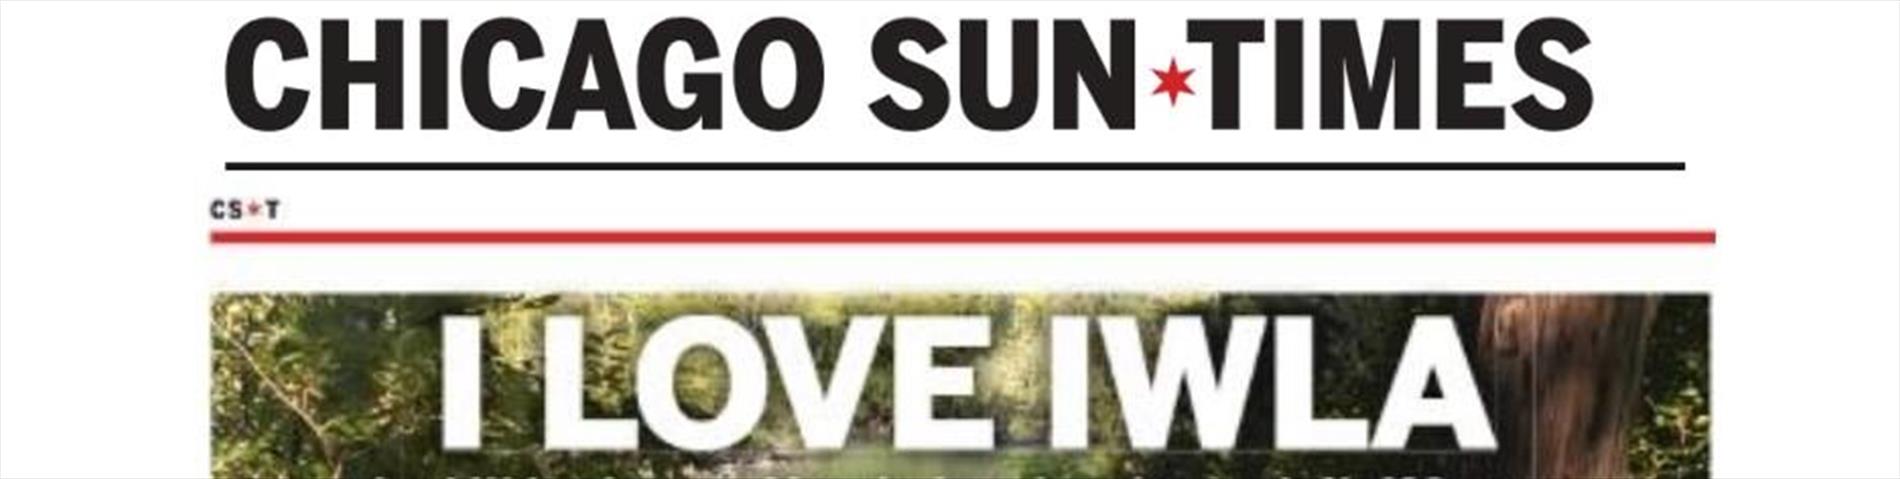 Chicago Sun Times masthead and headline Jan 19 2022